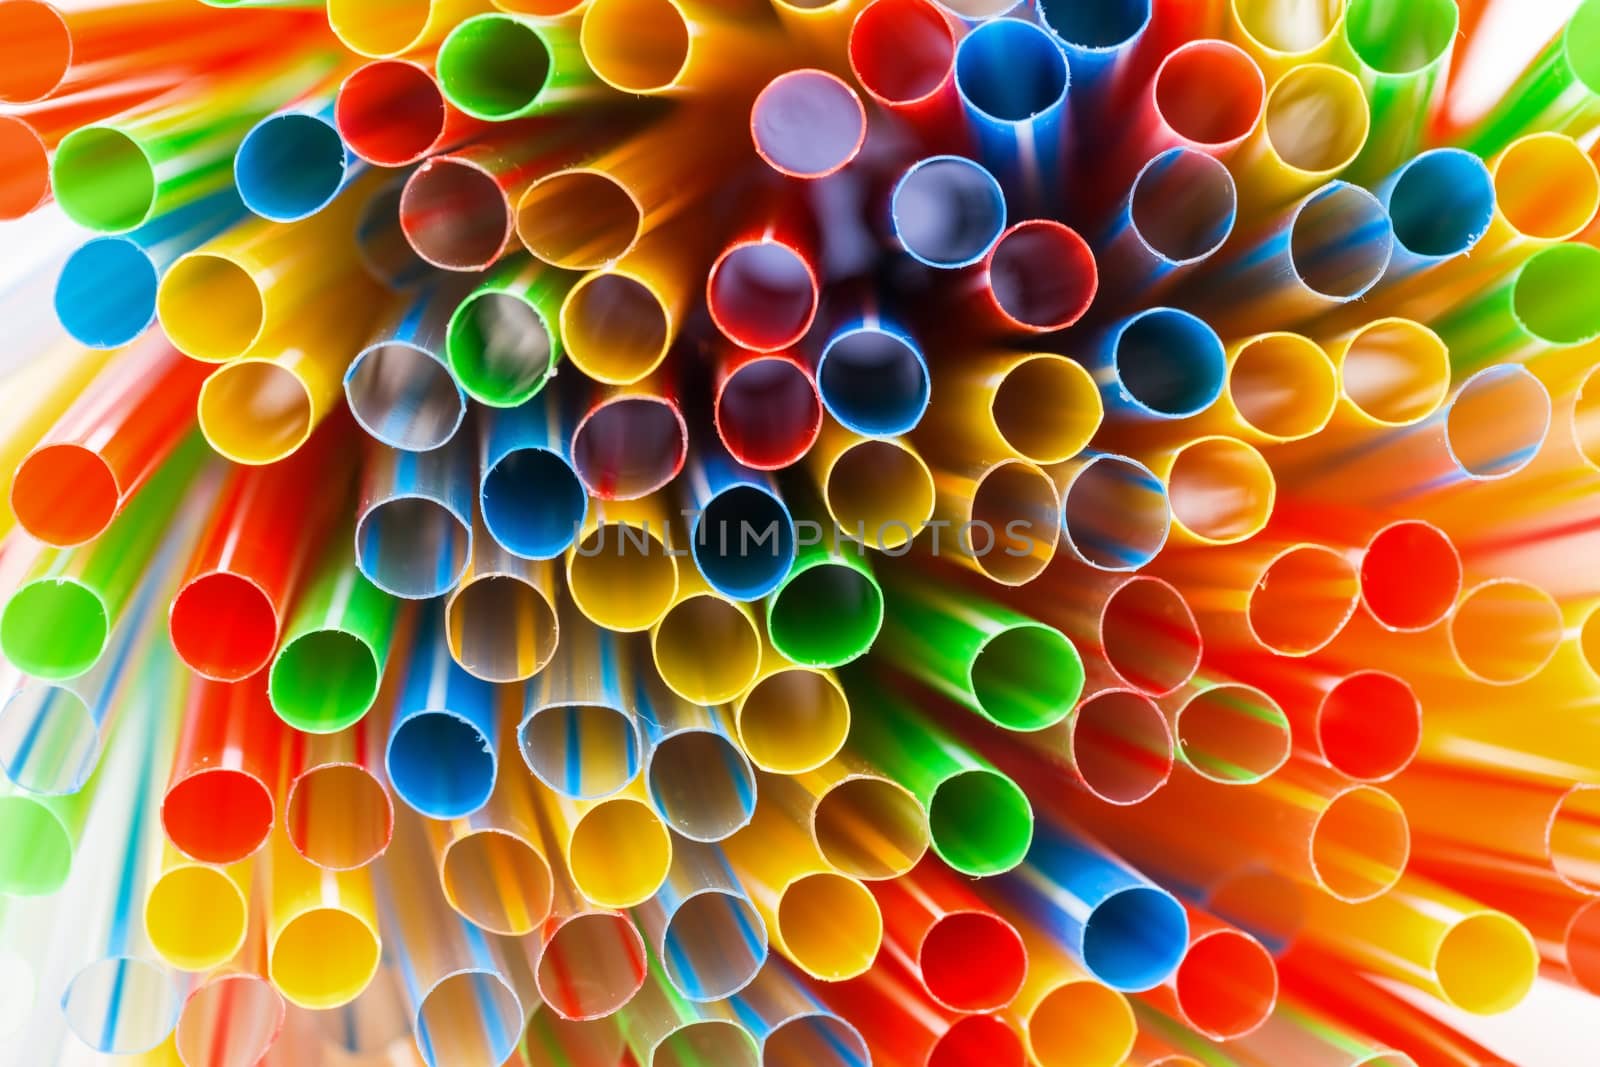 Colored Plastic Drinking Straws closeup, macro